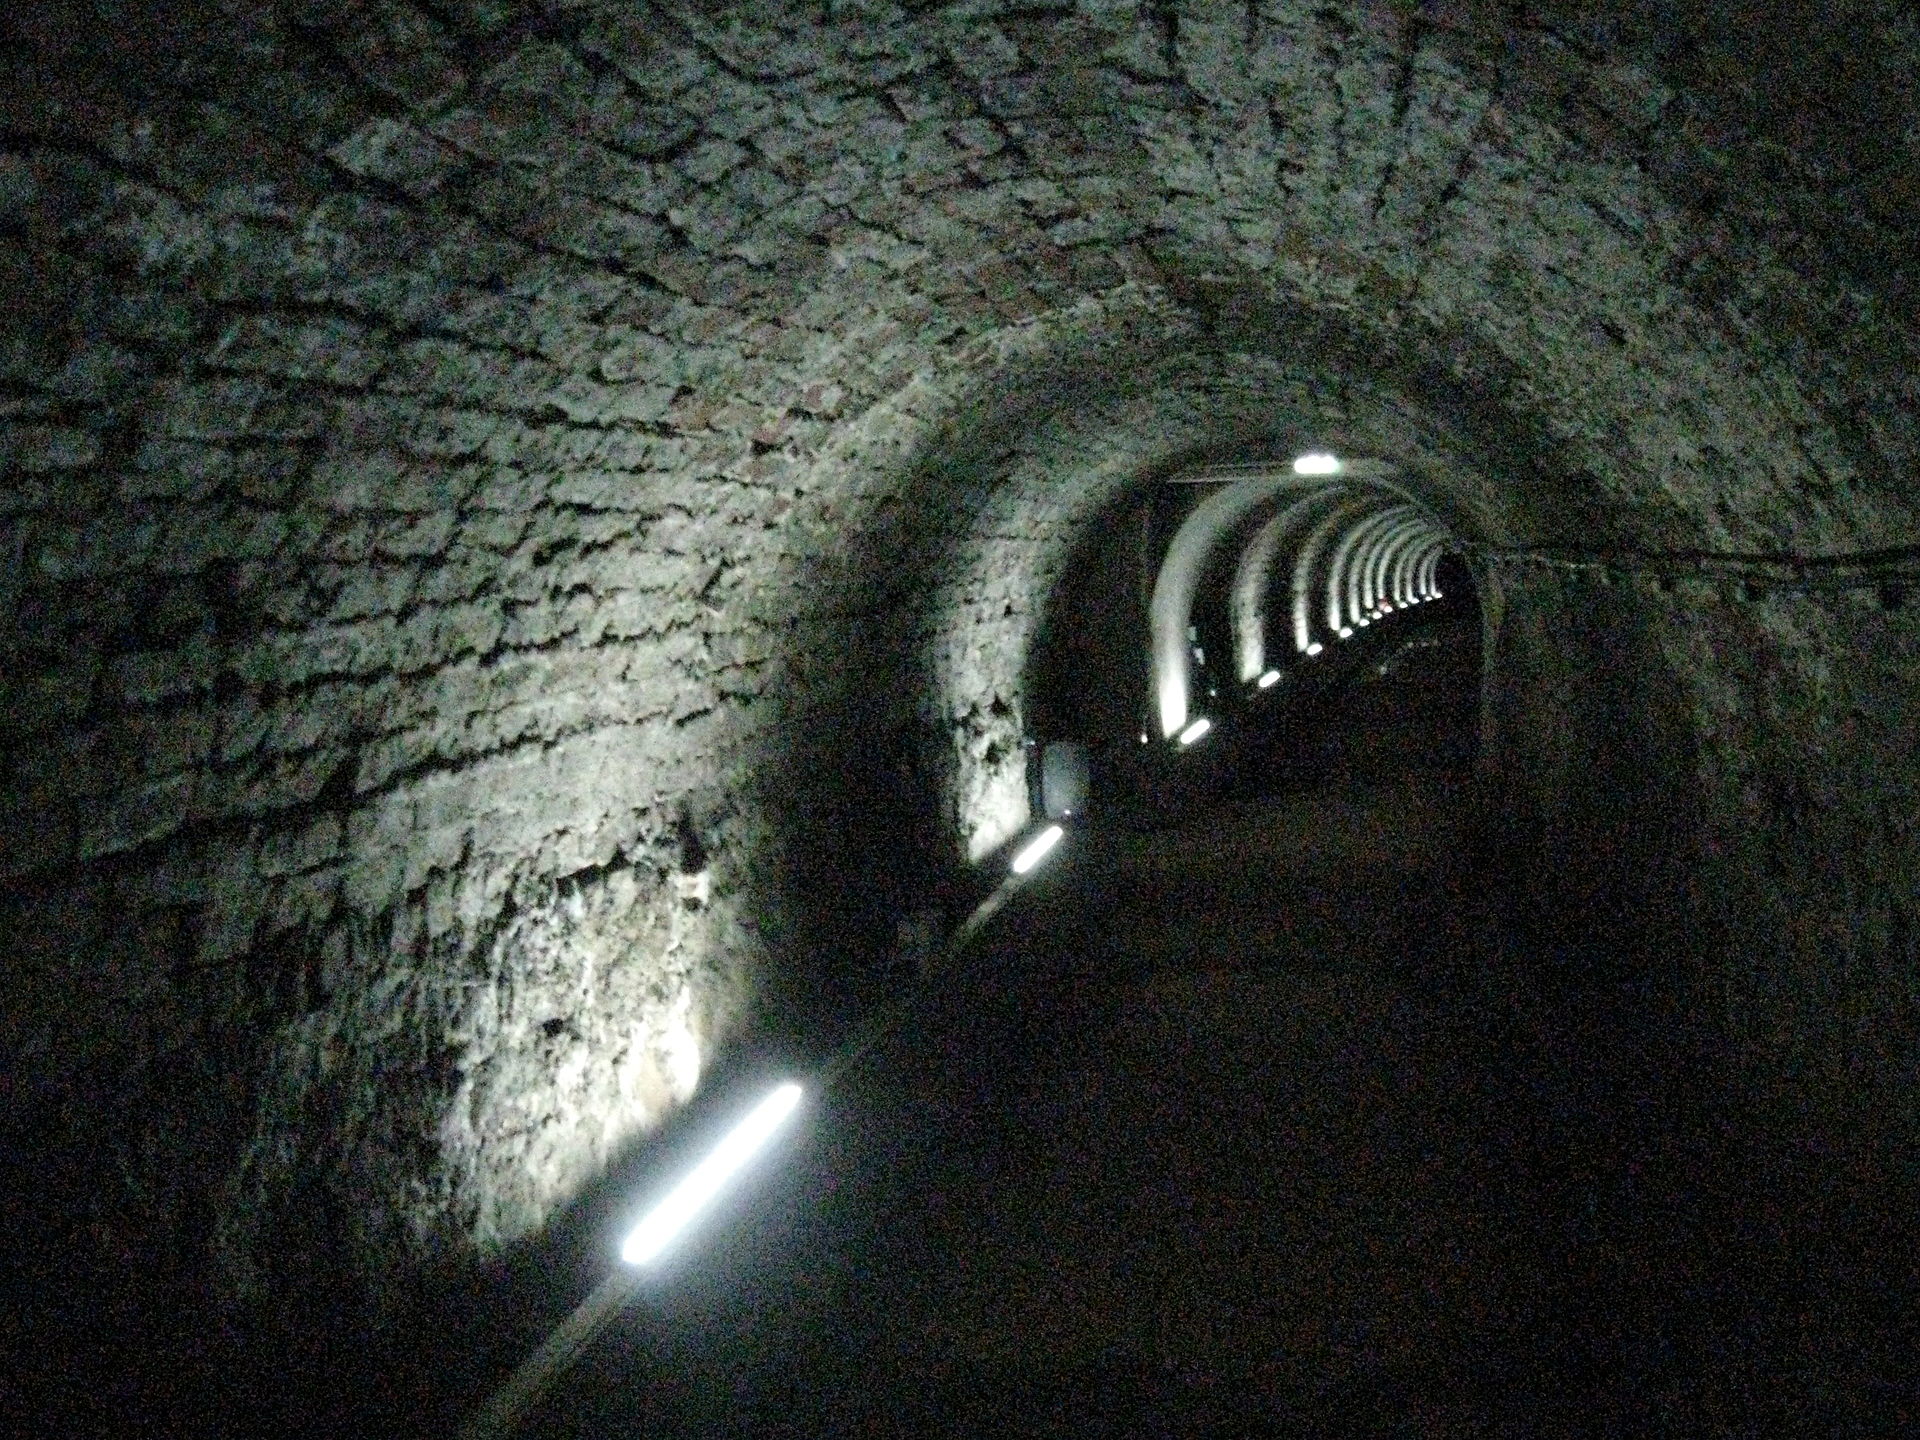 Photograph of Victoria Tunnel